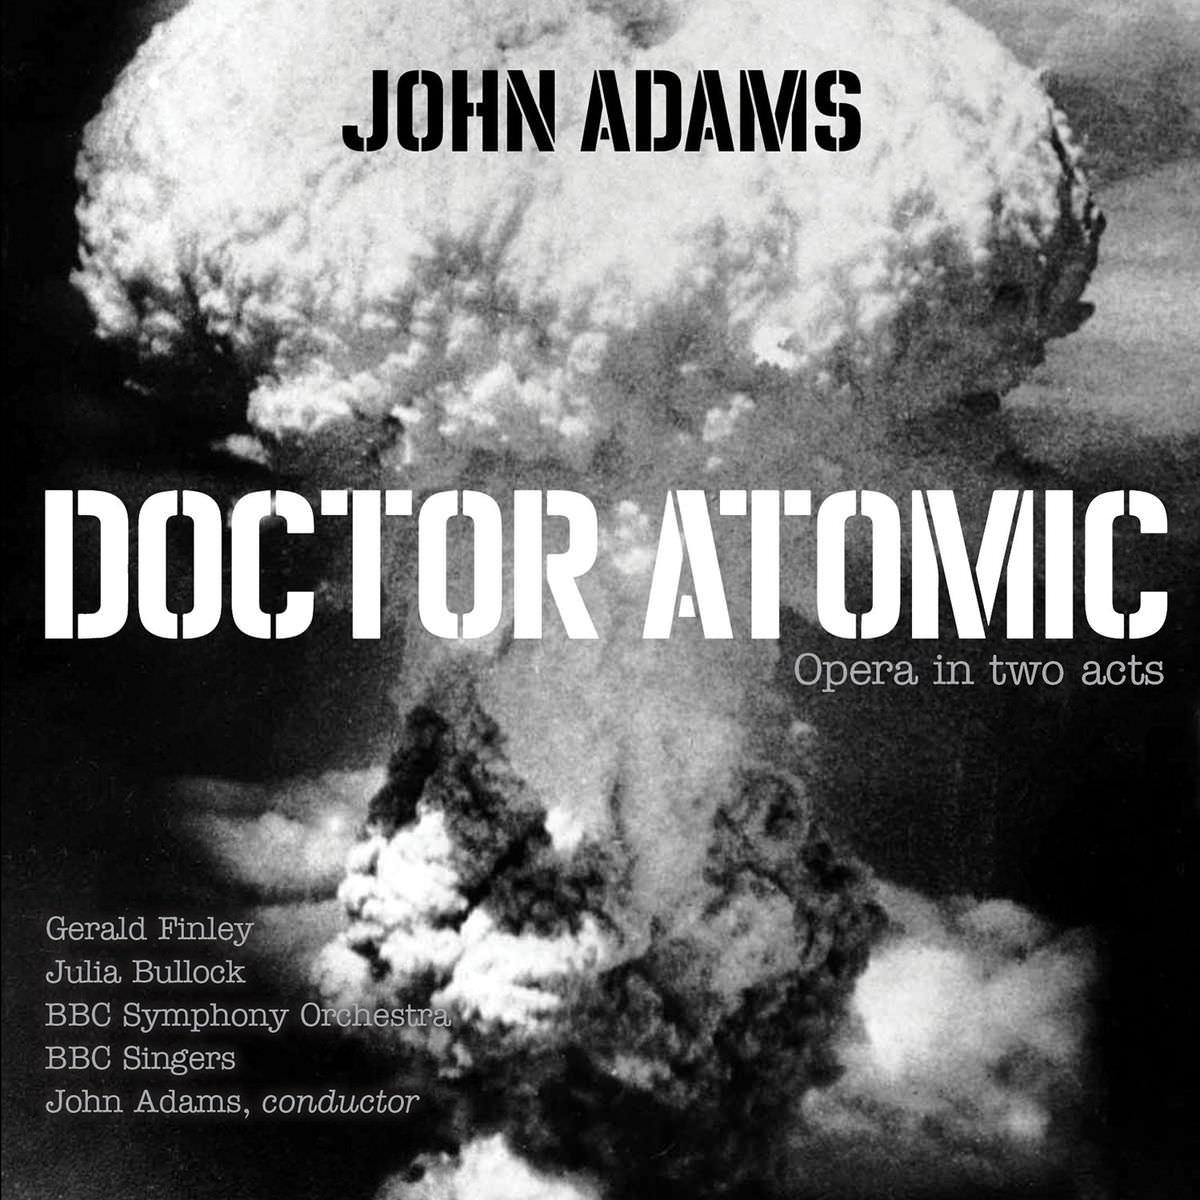 BBC Symphony Orchestra, BBC Singers, John Adams - John Adams: Doctor Atomic (2018) [FLAC 24bit/48kHz]